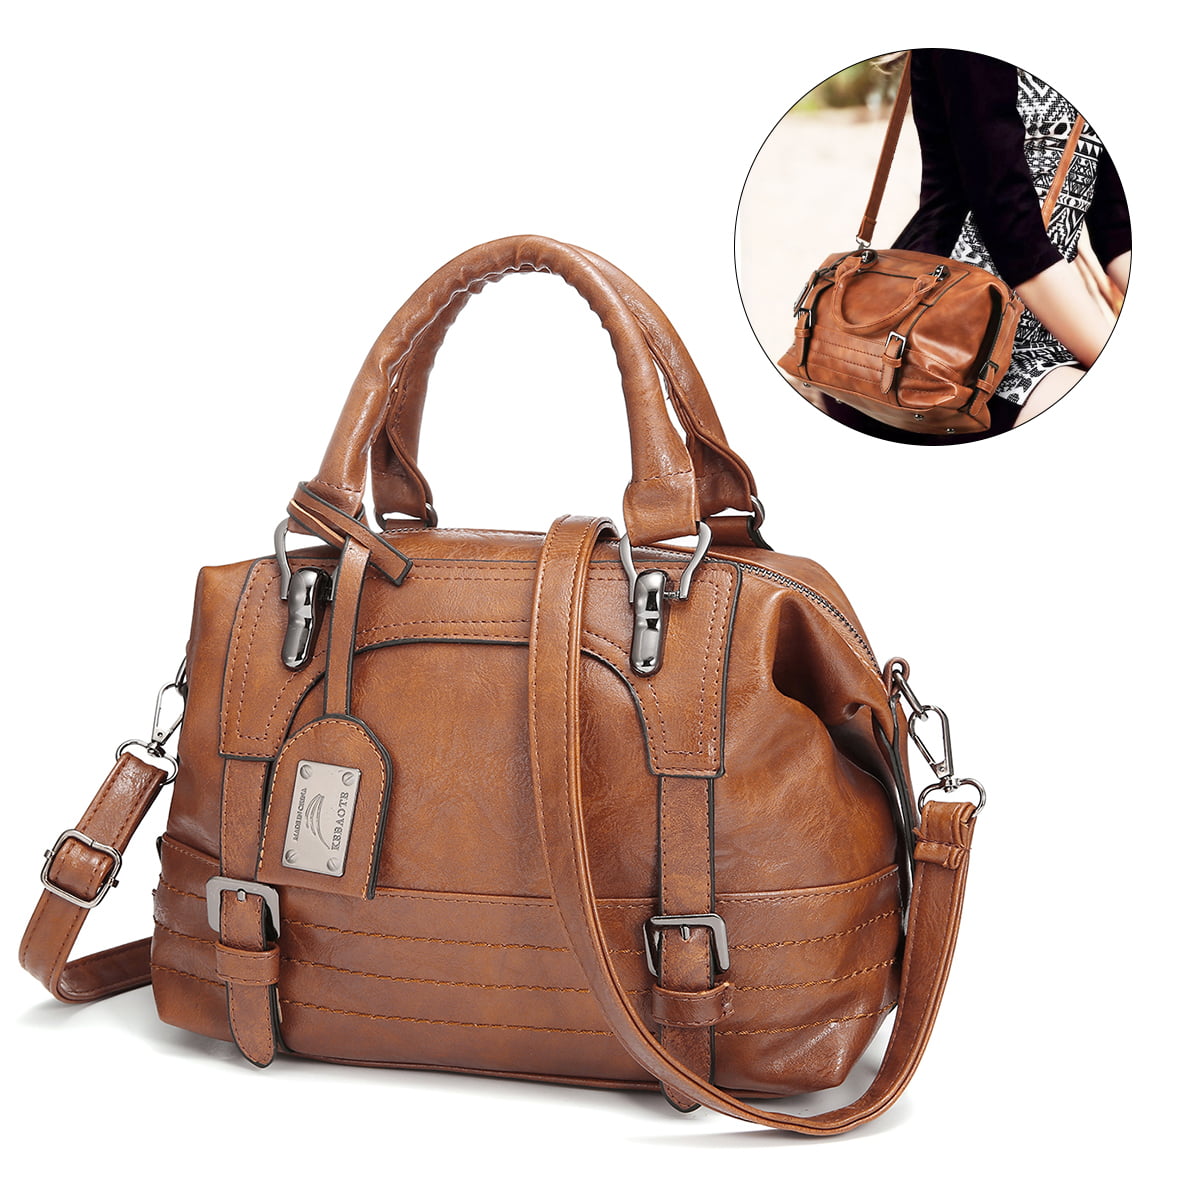 Handbag Tote Messenger Satchel Leather Crossbody Women Ladies Purse Shoulder Bag